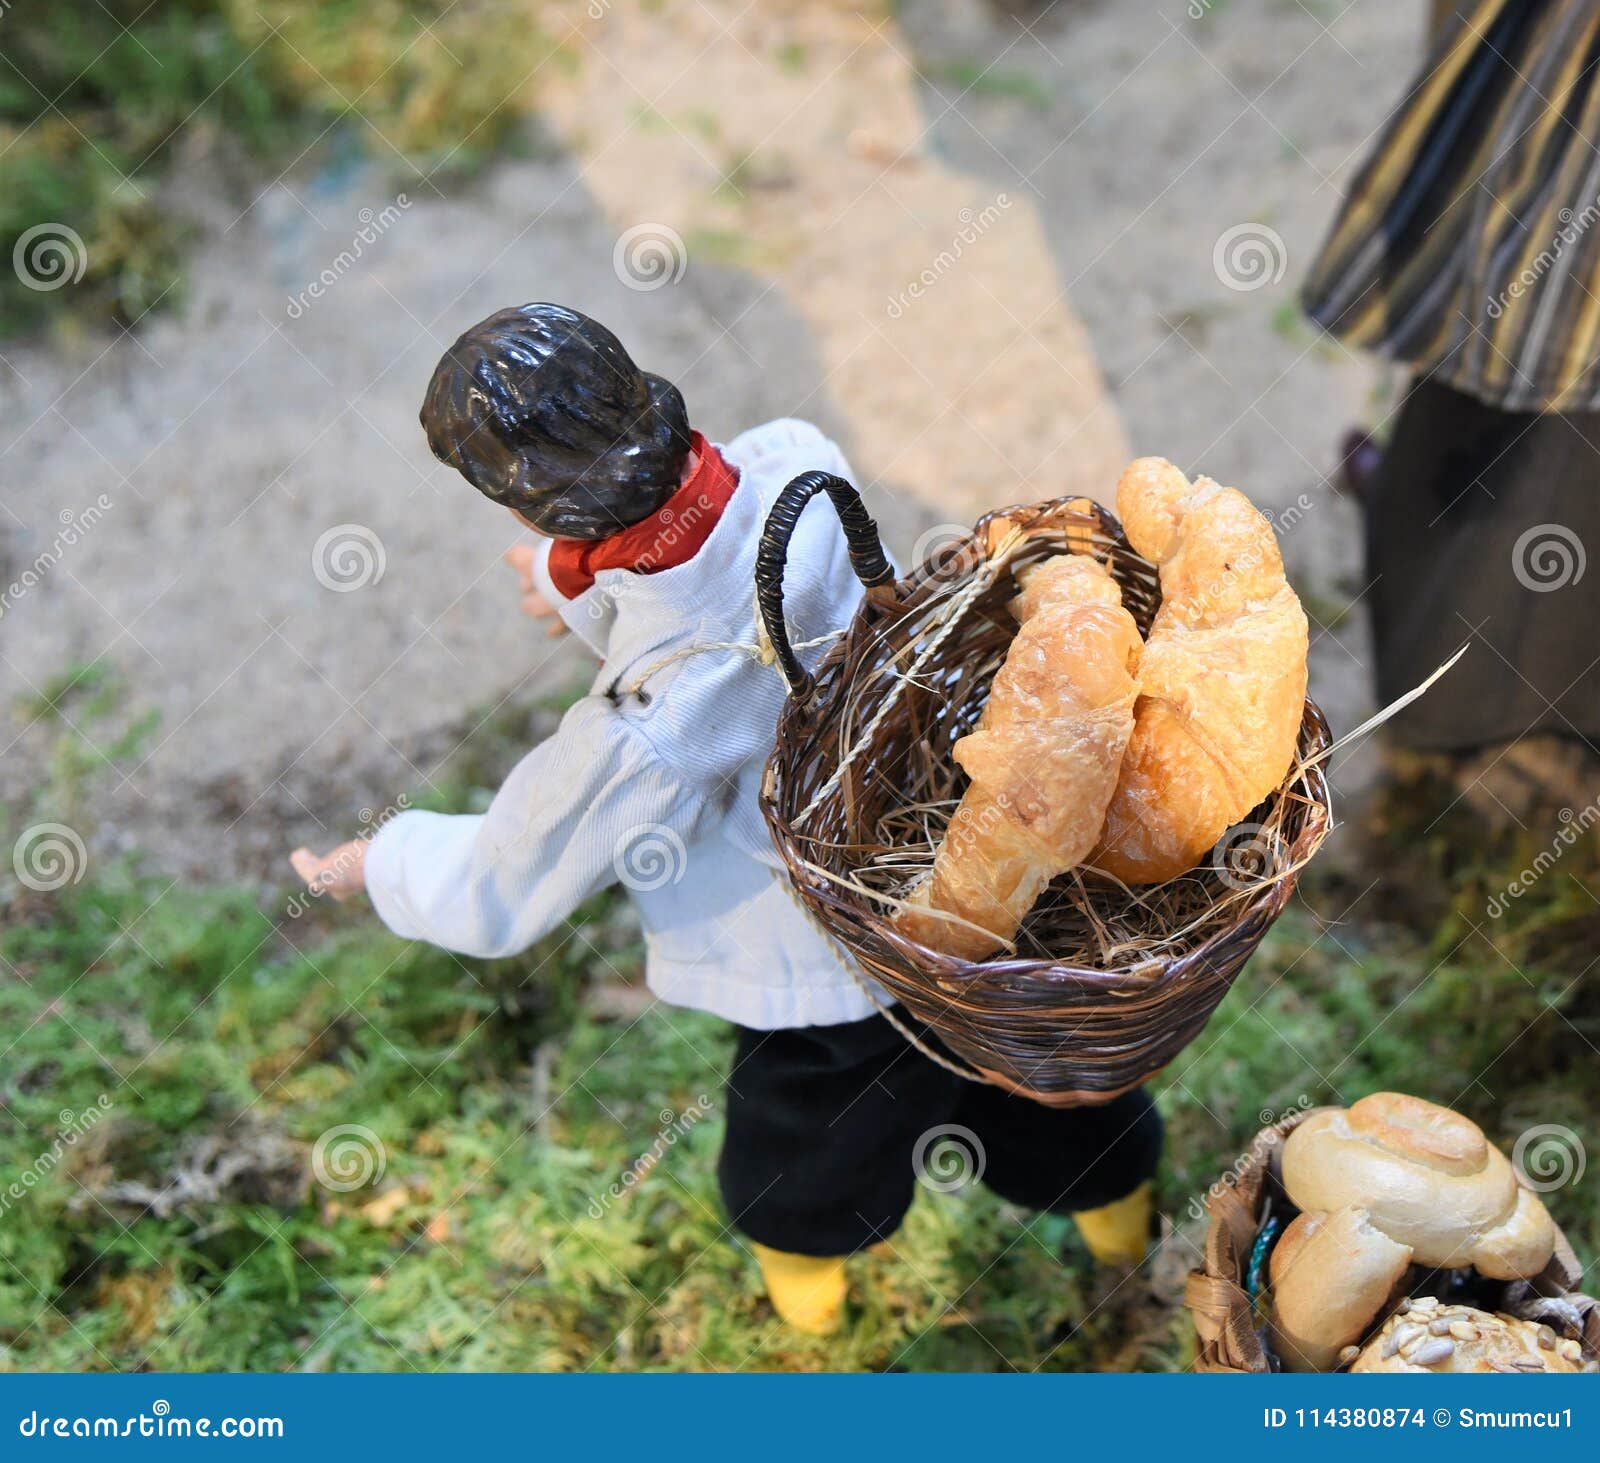 Medieval Village Baker Figurine Stock Photo - Image of tasty, occasion